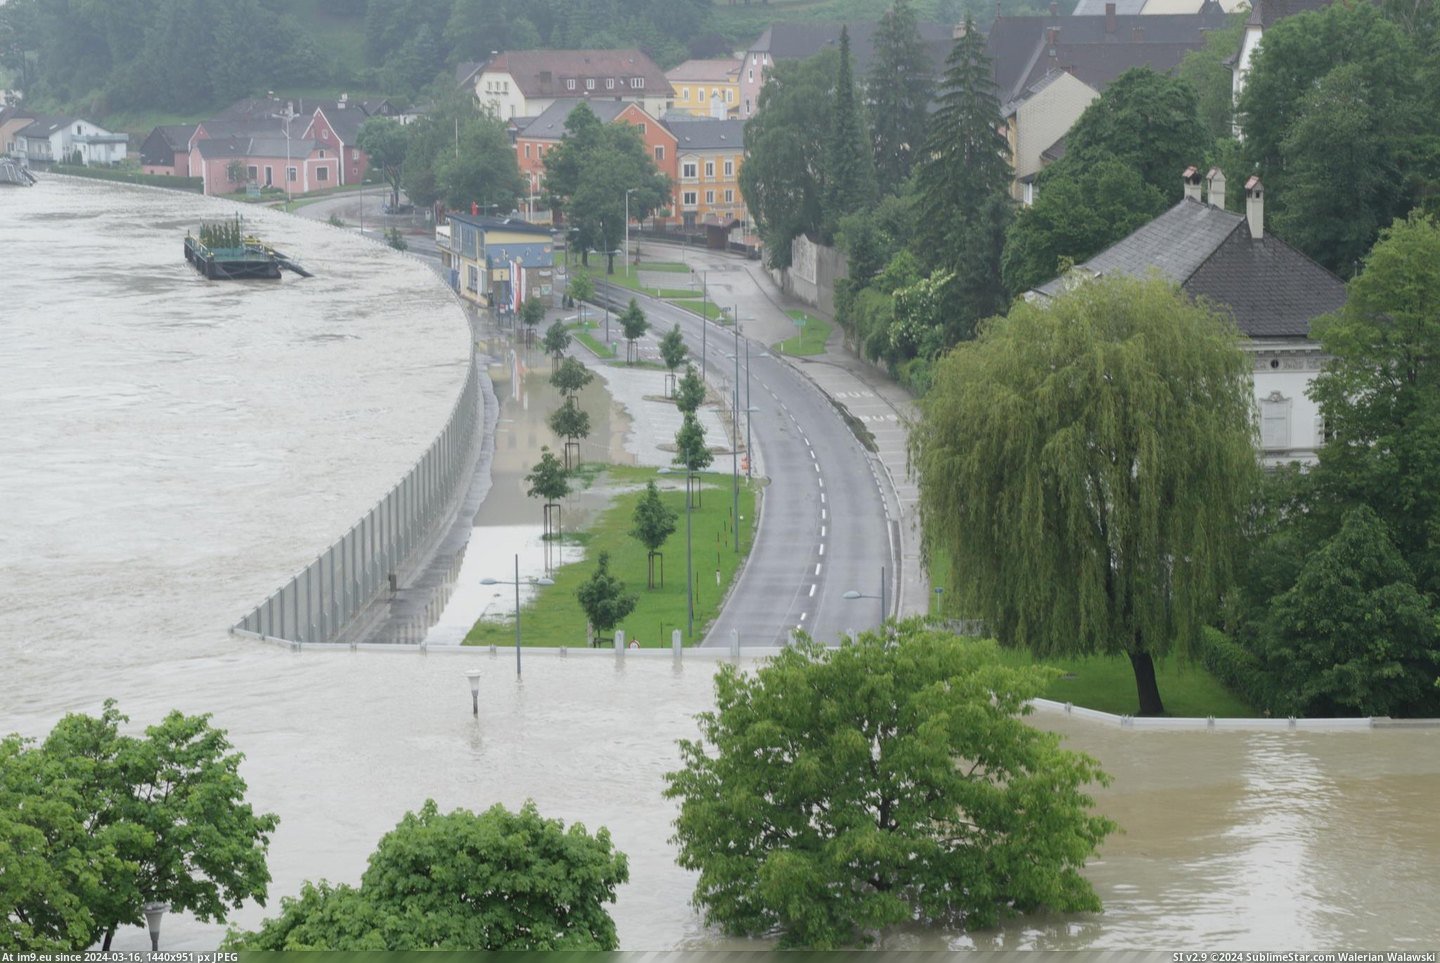 #Amazing #Wall #Engineering #Feat #Flood #Austria #Mobile [Pics] Mobile flood wall in Austria, amazing feat of engineering. Pic. (Obraz z album My r/PICS favs))